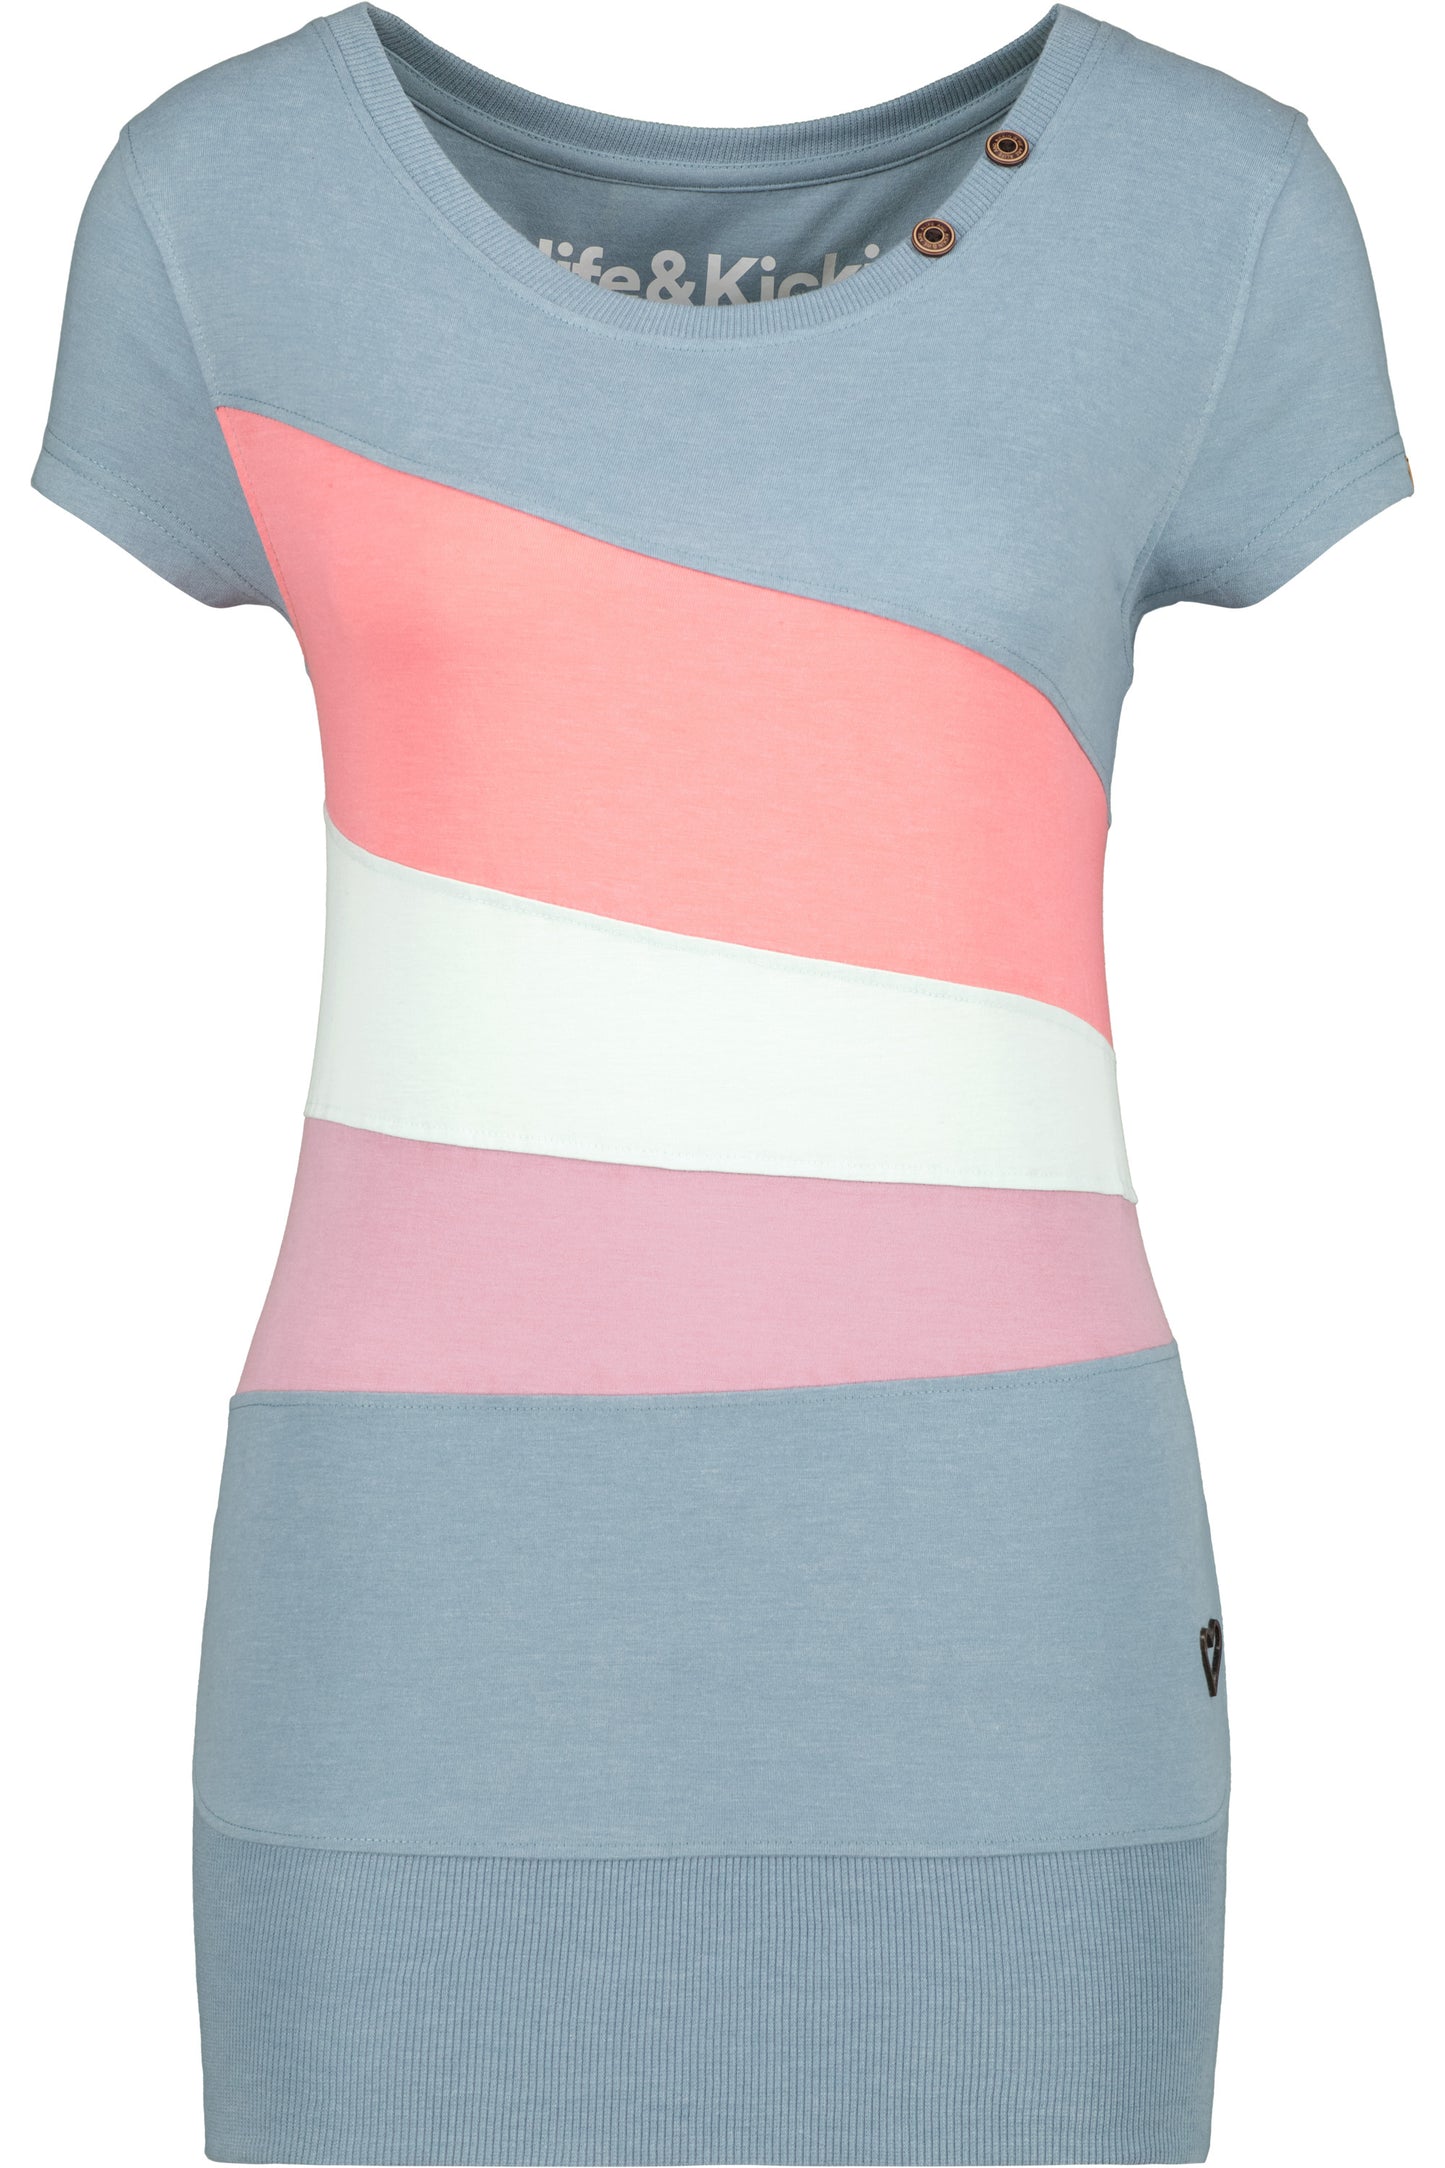 ClementinaAK A T-Shirt Damen - Trendpiece für den Sommer Grau